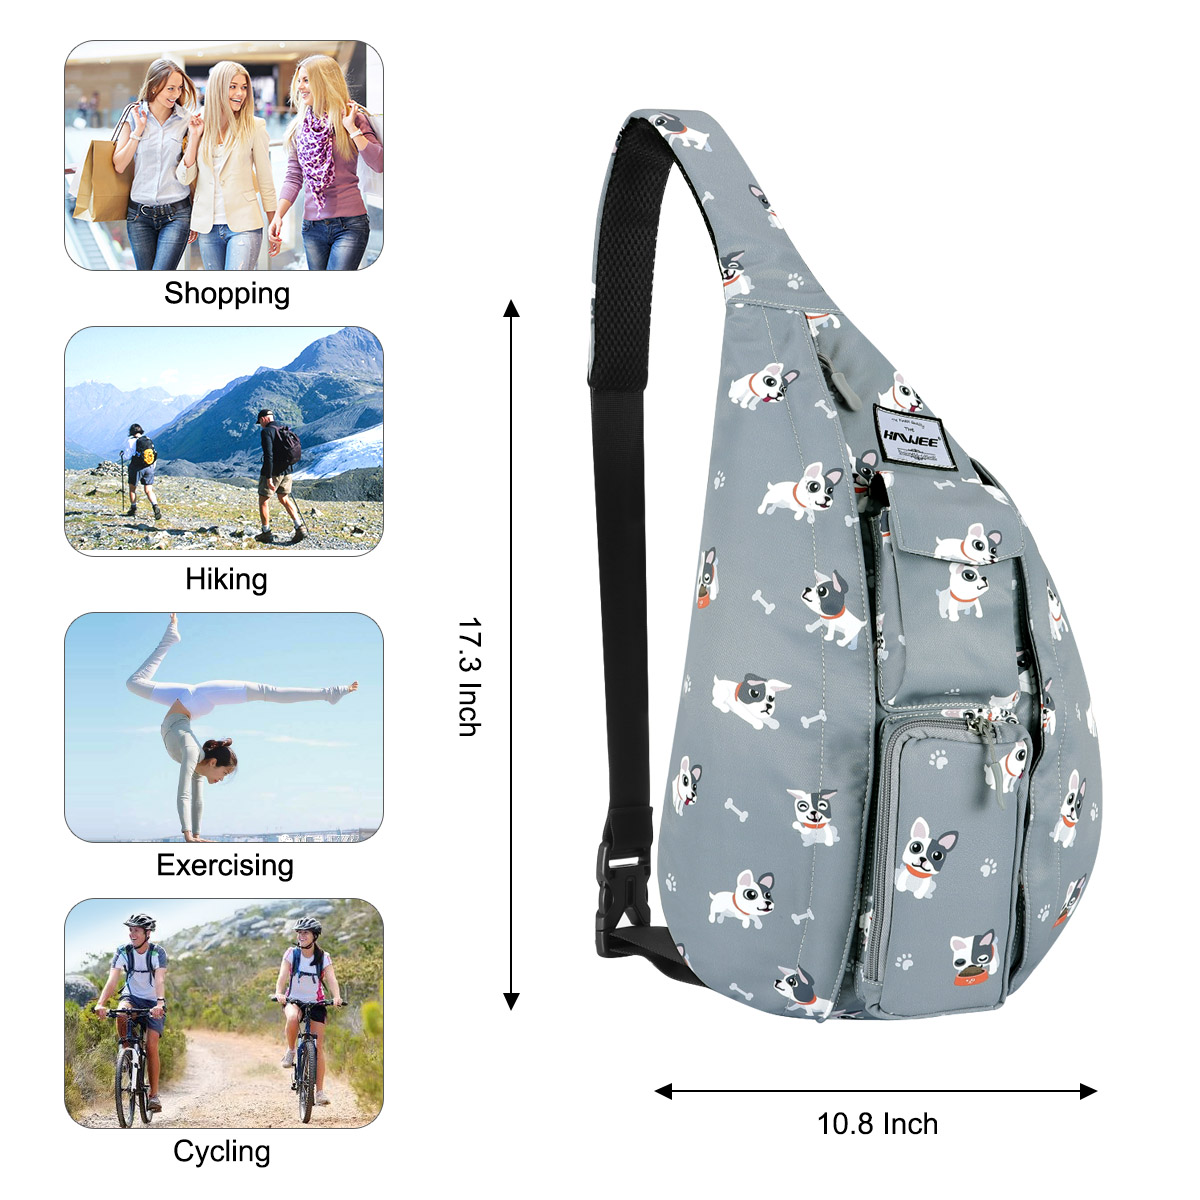 HAWEE Sling Backpack Hiking Backpack Chest Sling Bag Sports Travel Crossbody Daypack for Women, Grey + White Dog - image 5 of 7